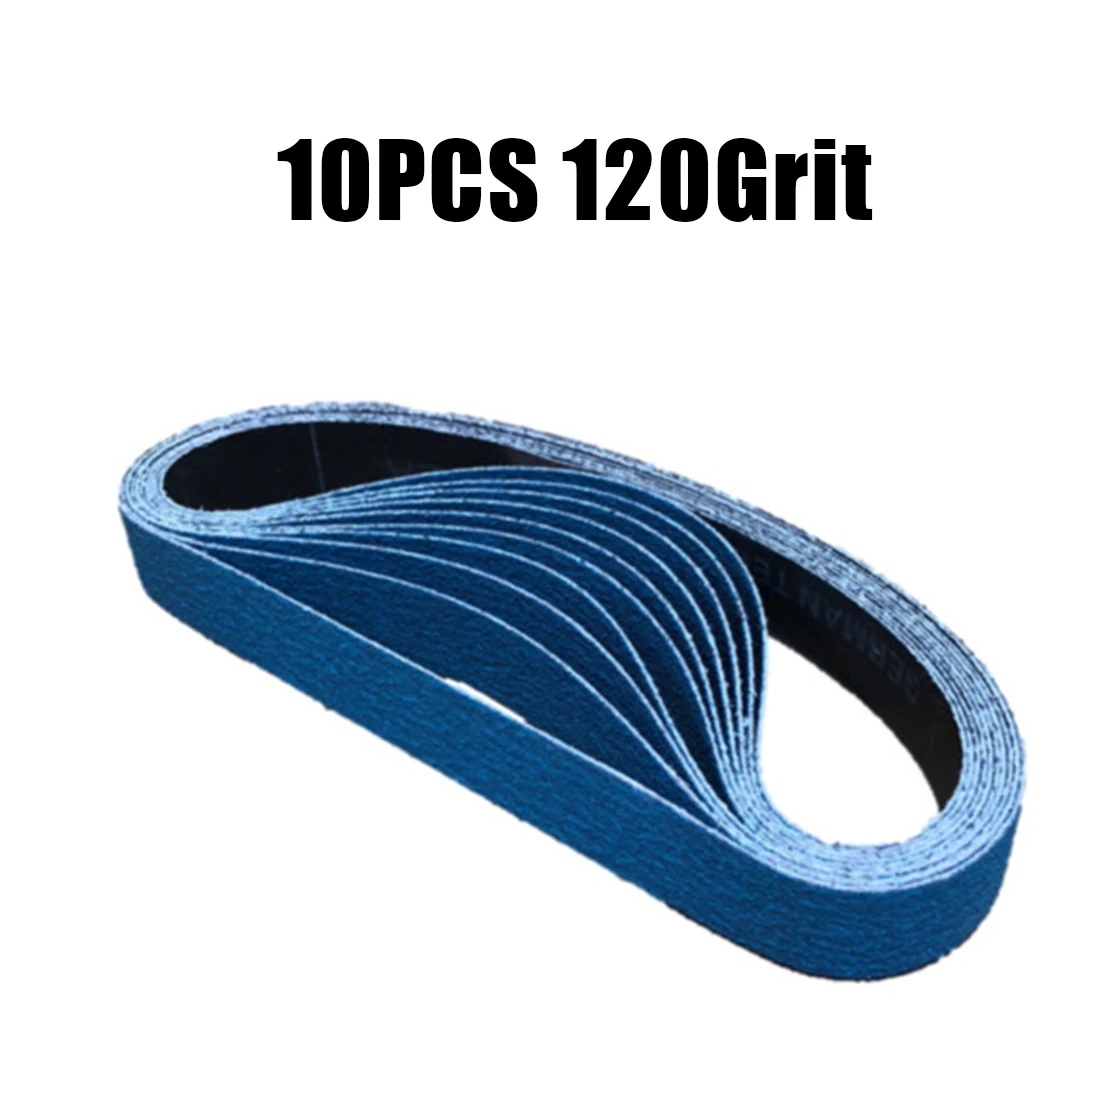 10PCS Sanding Belts Zirconia Sander File Abrasive Grinding Polishing Belts 40/60/80/120 Grit 20mmx520mm